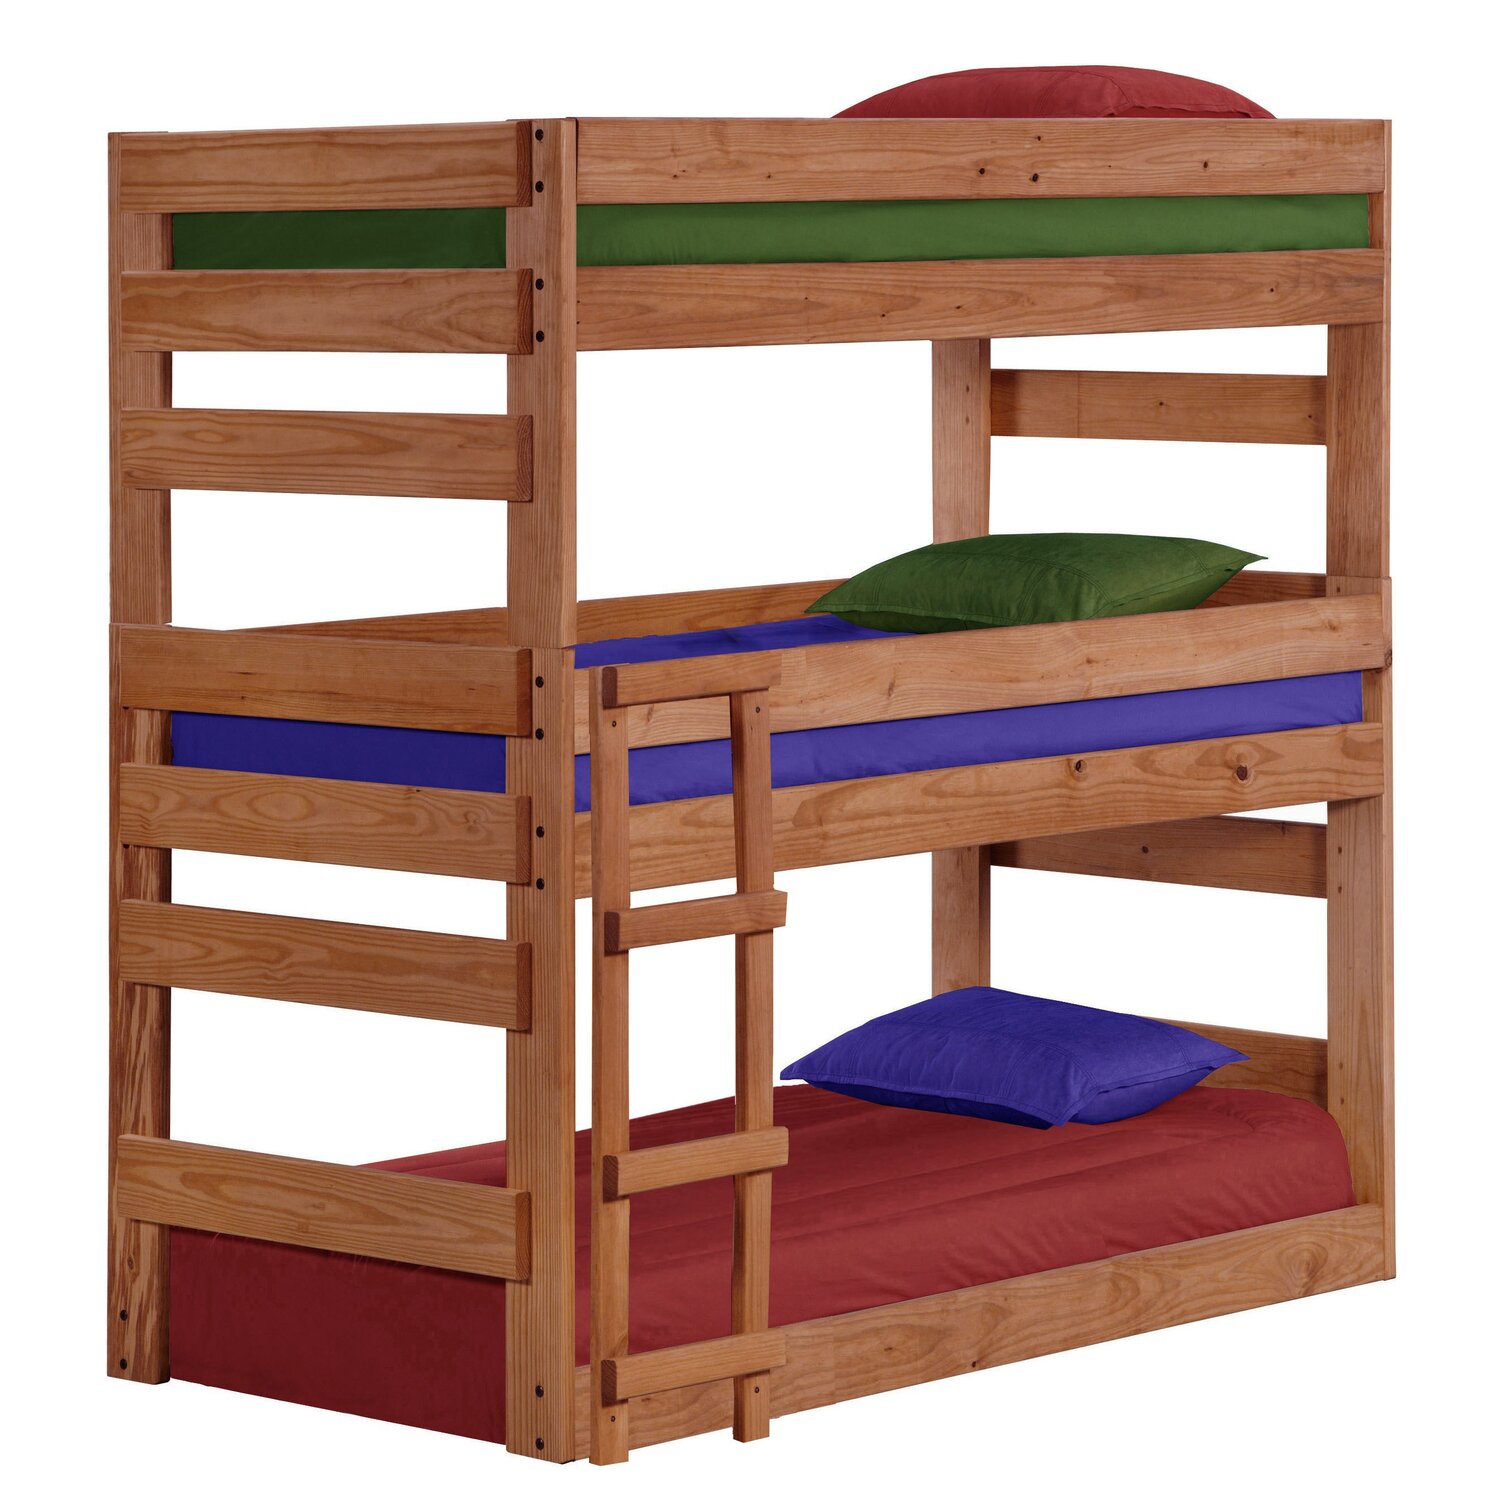 Three bed bunk bed Fujairah